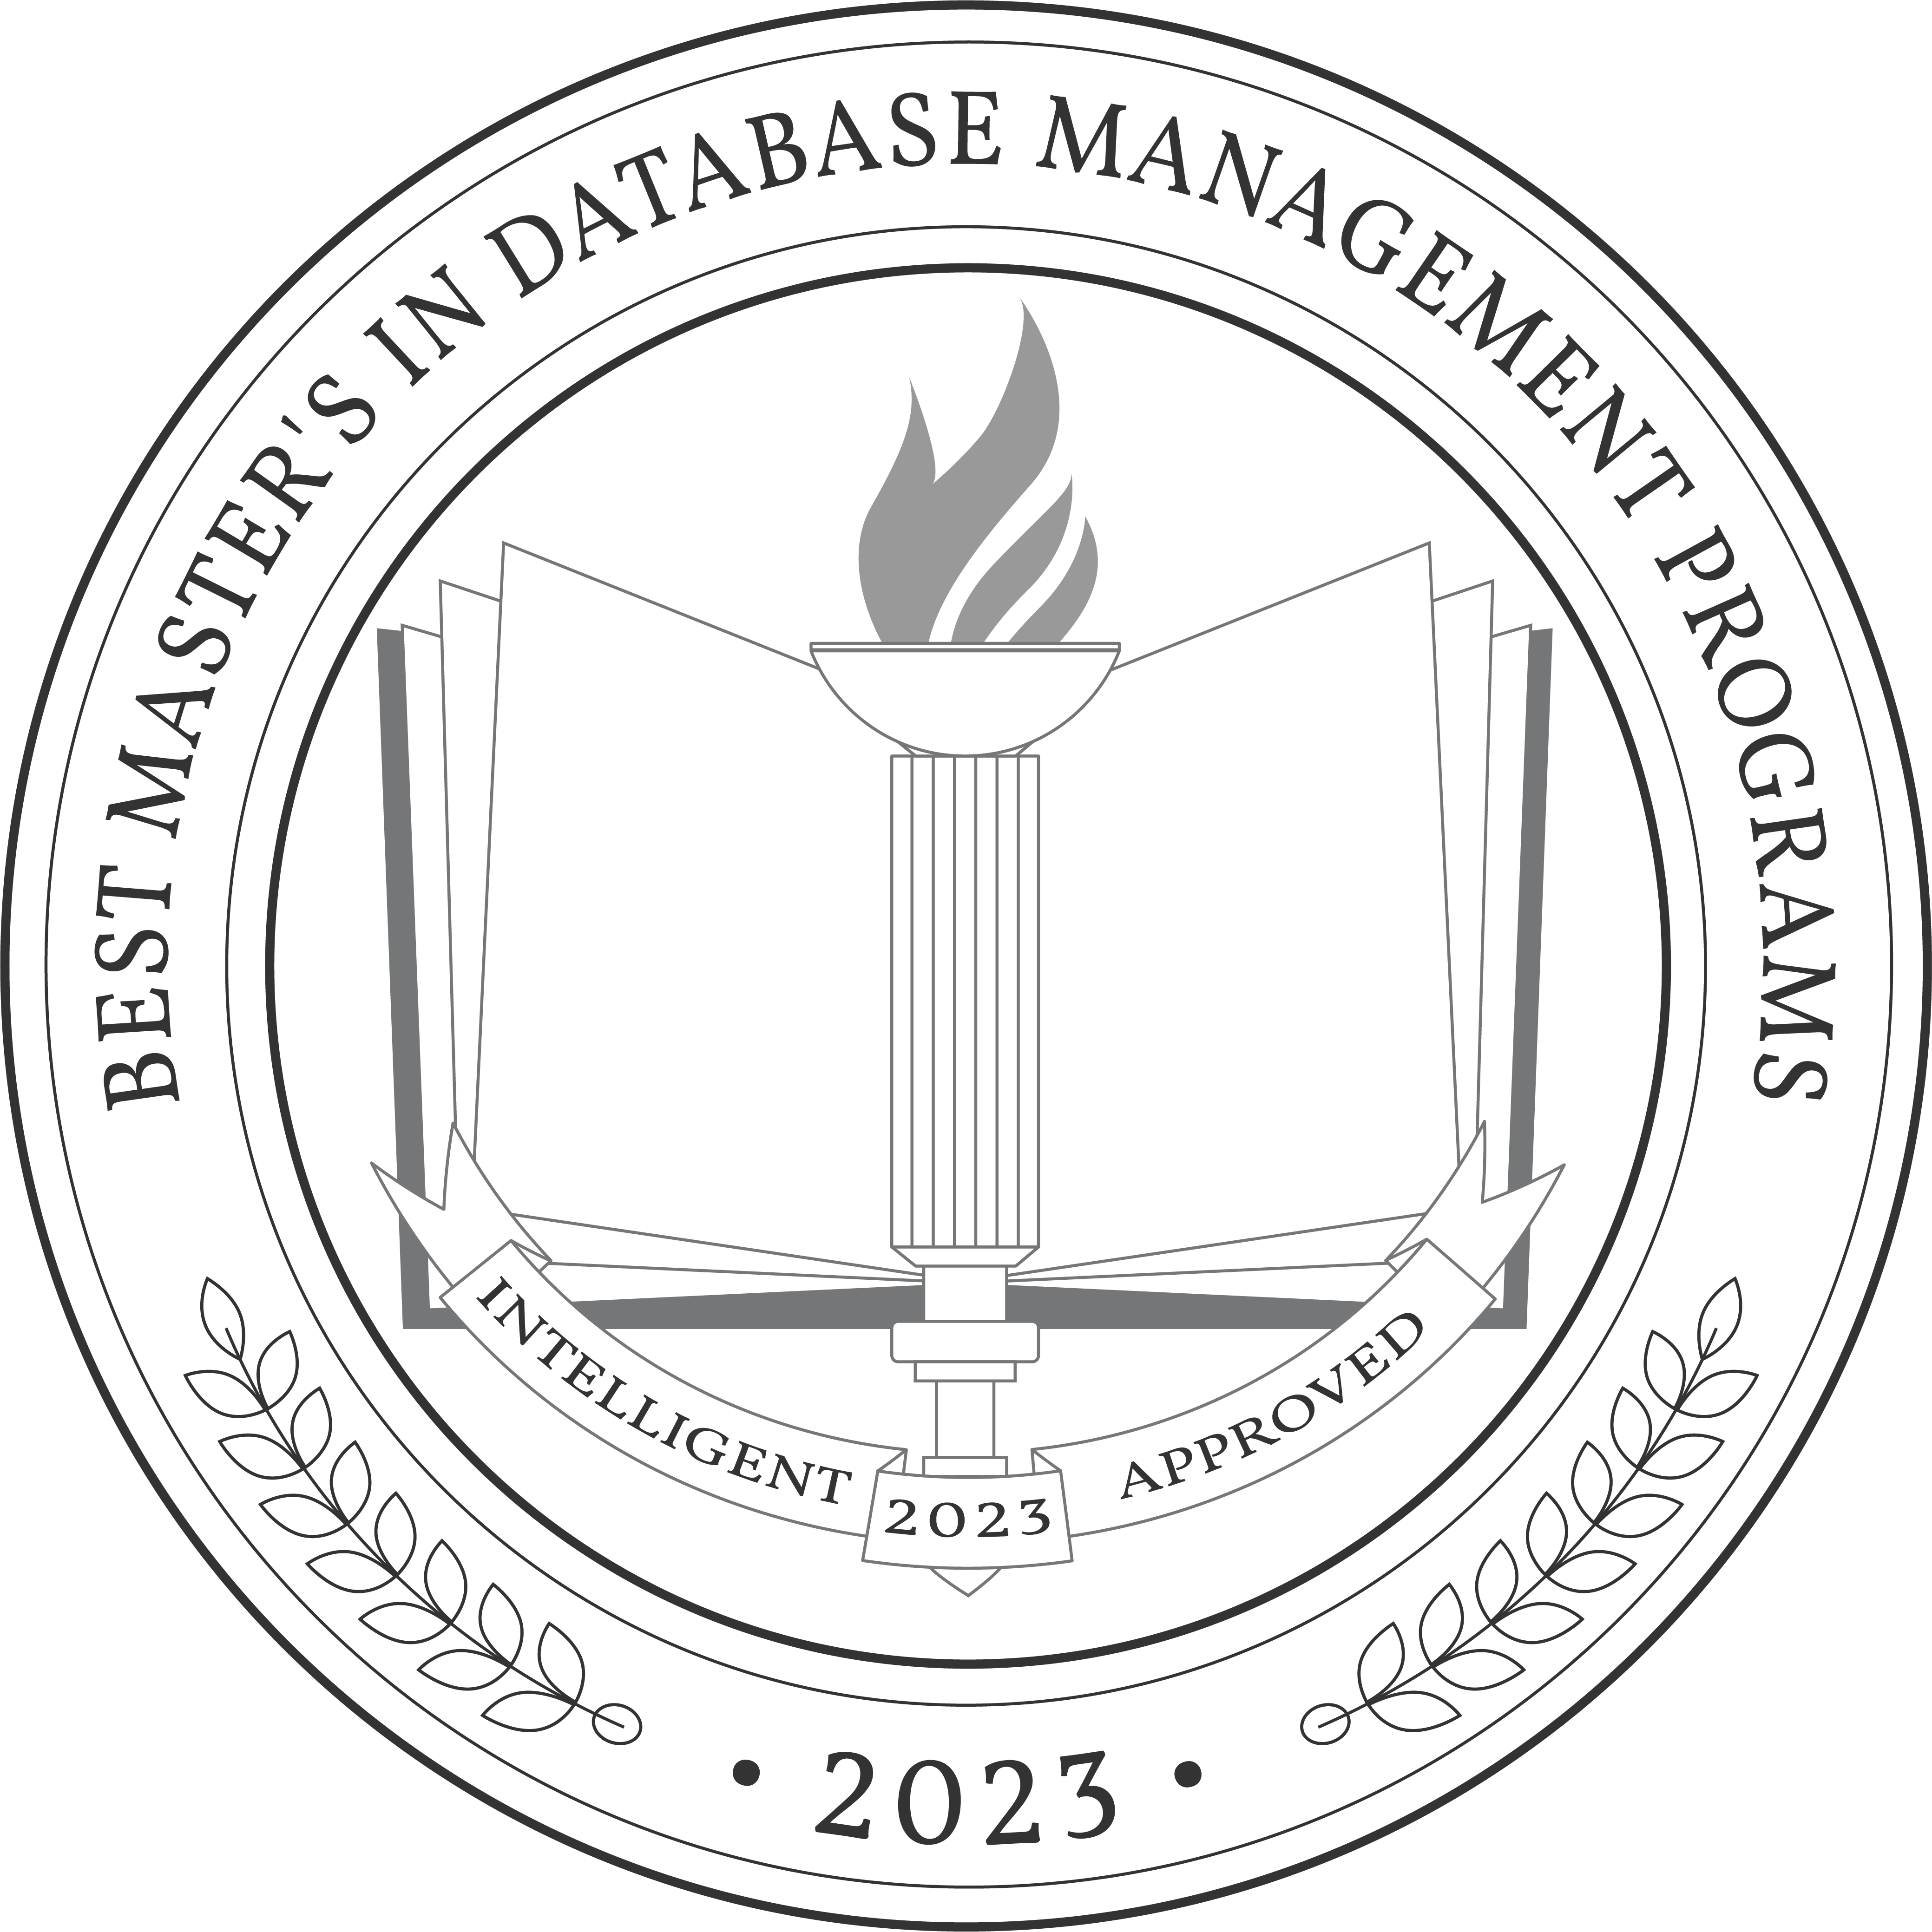 Best Master's in Database Management Degree Programs of 2023